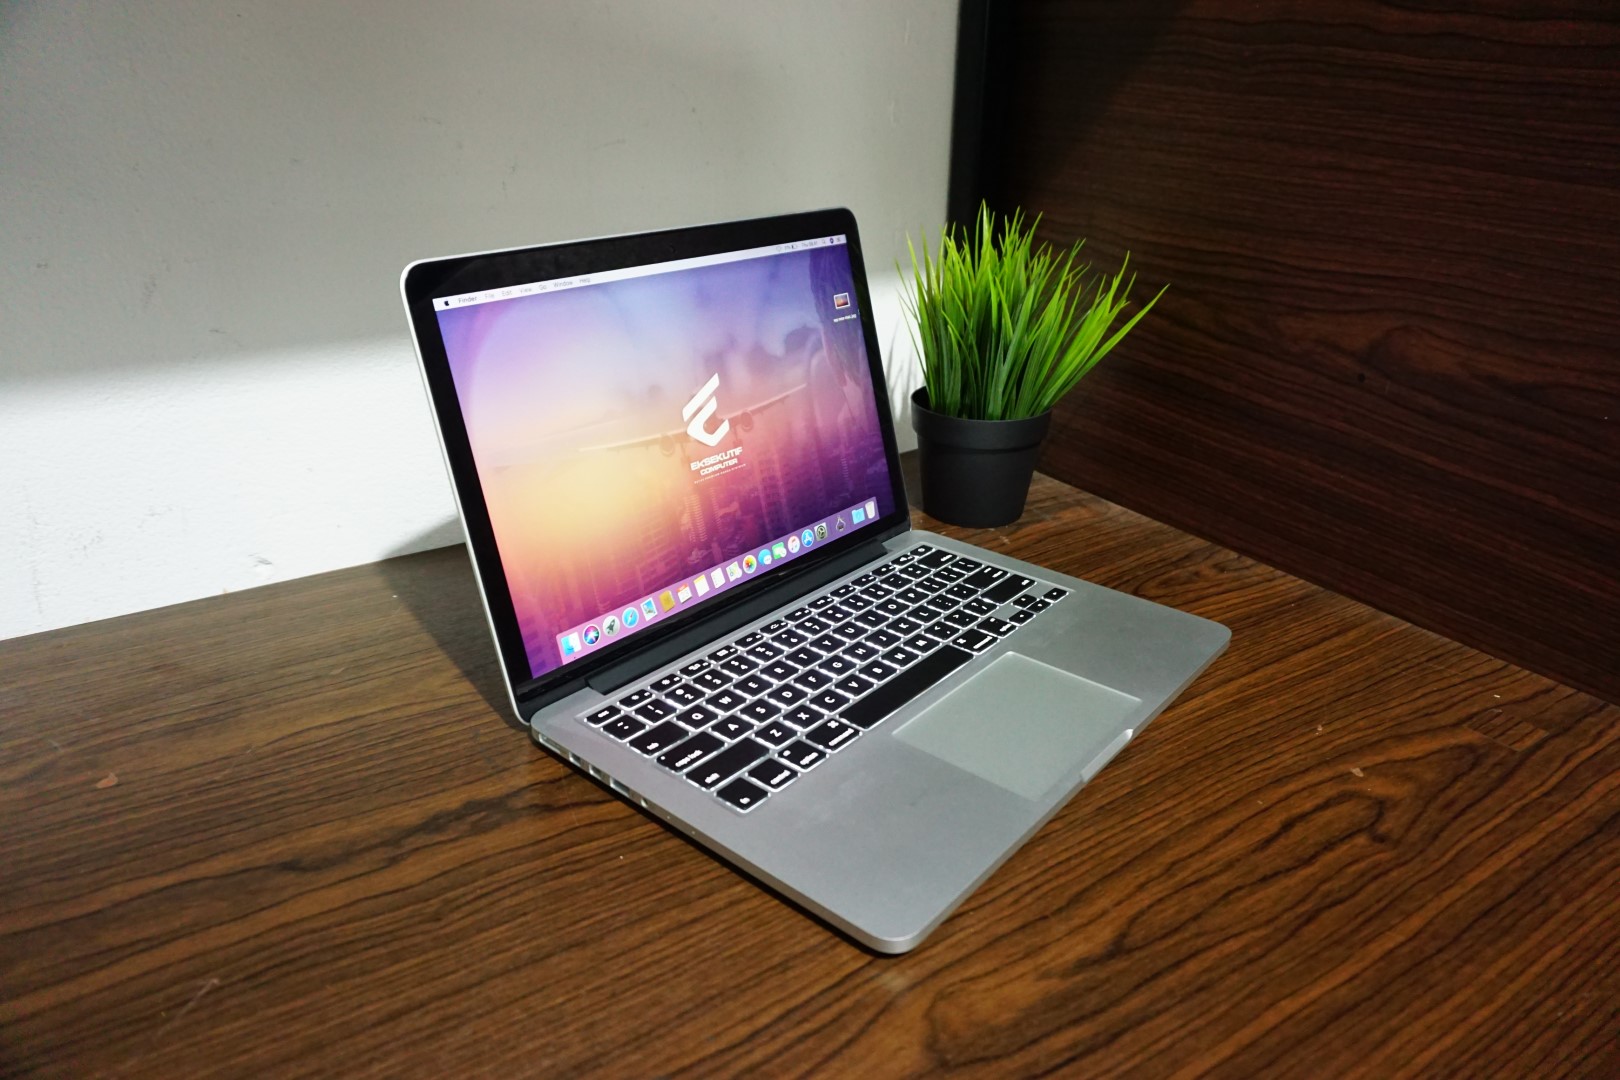 Jual Laptop Macbook Pro ME866 Late 2013 cc 745